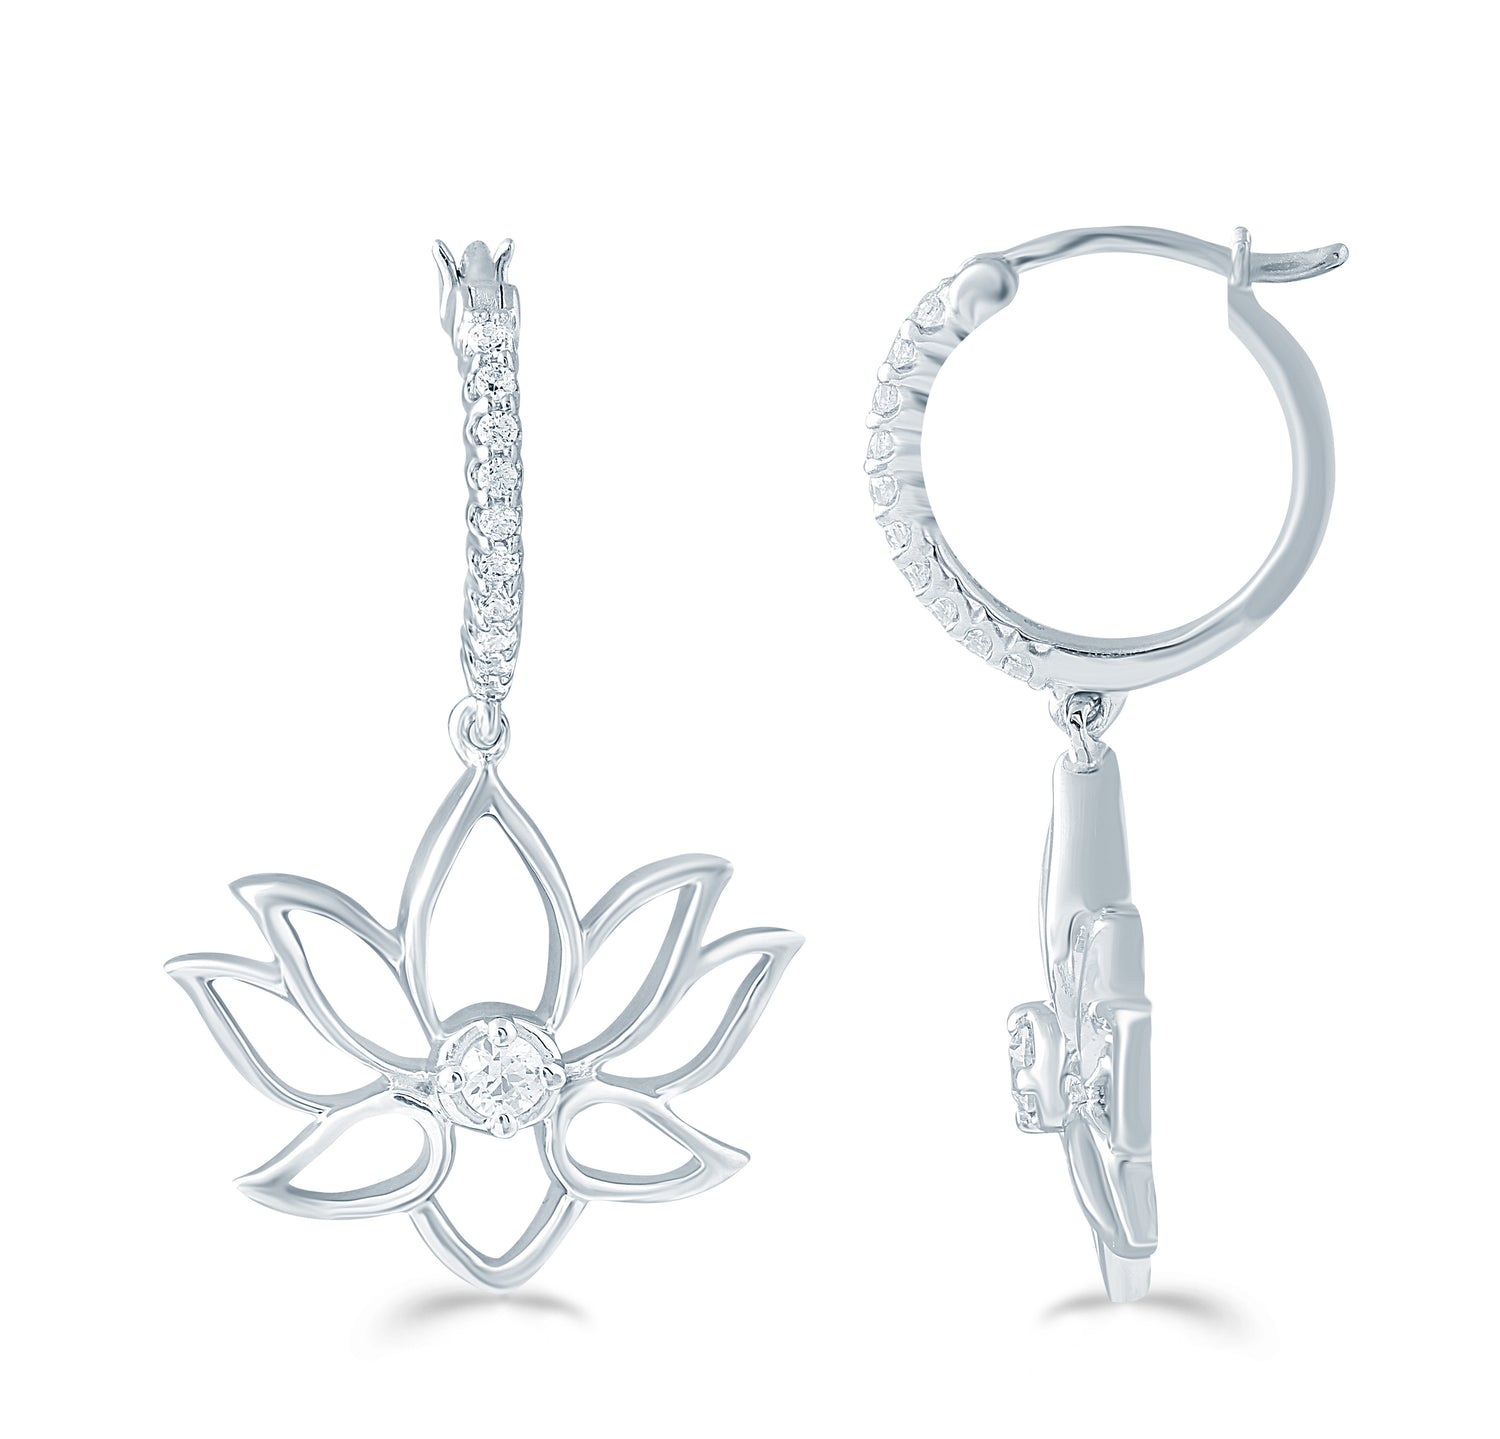 Set of 2 : 3/10 CT TW Diamond Lotus Flower Pendant & Earrings in Sterling Silver